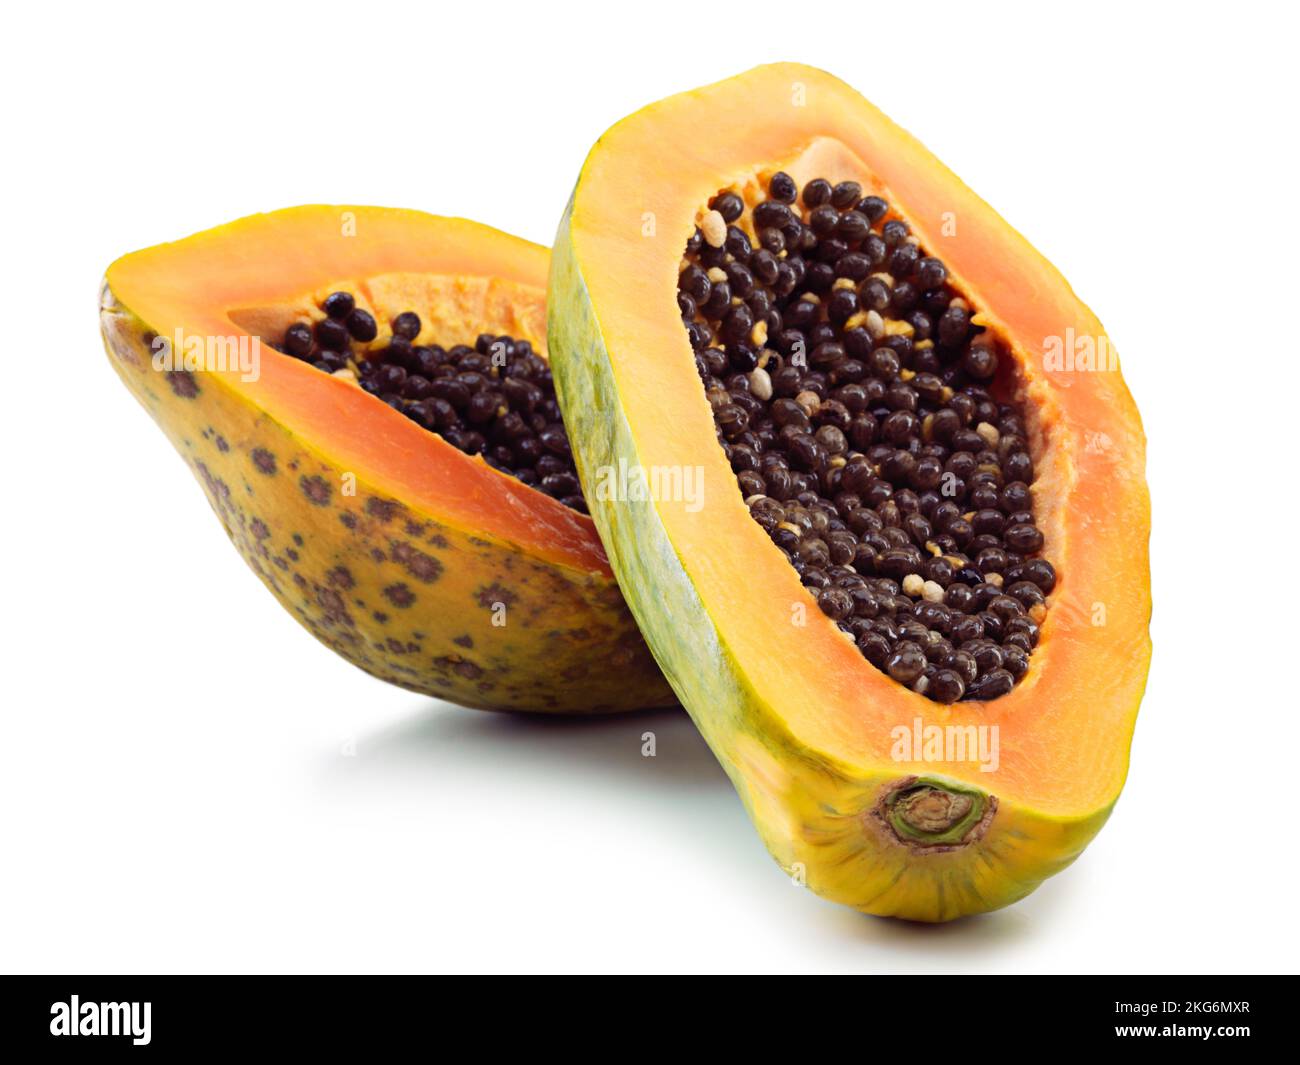 Mouthwatering papaya. Studio shot of cut papaya fruit against a white background. Stock Photo